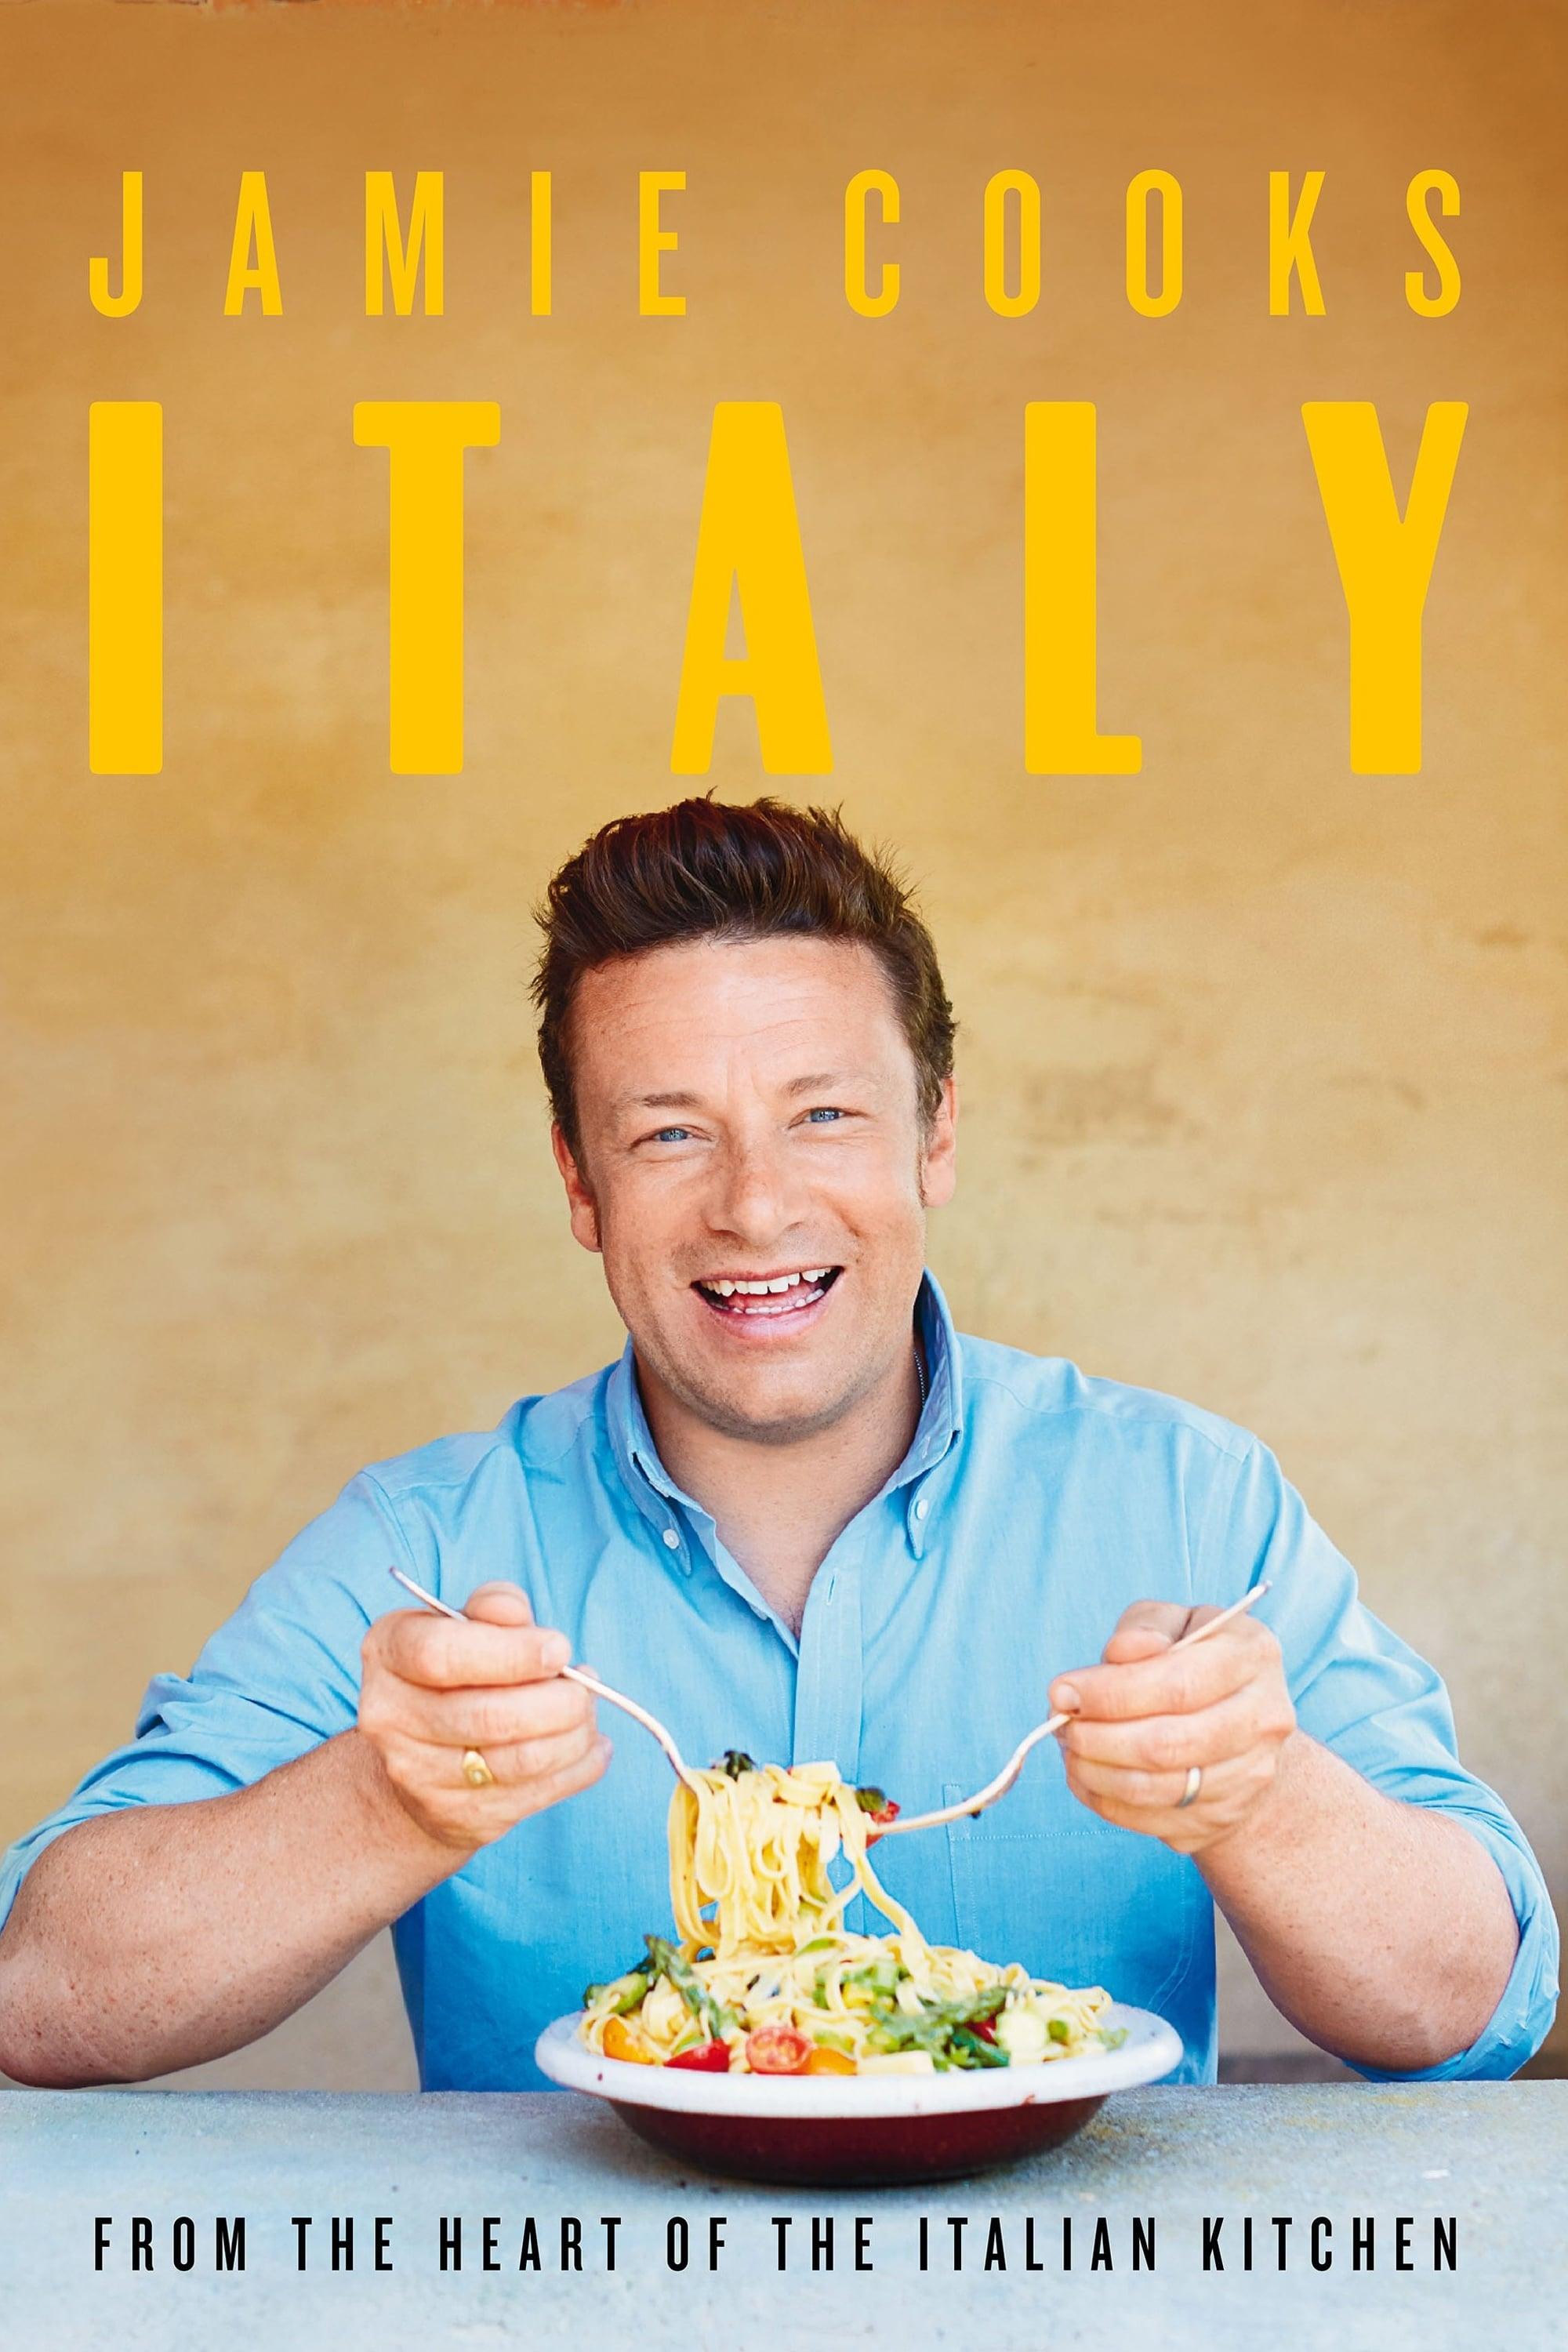 Jamie Cooks Italy poster